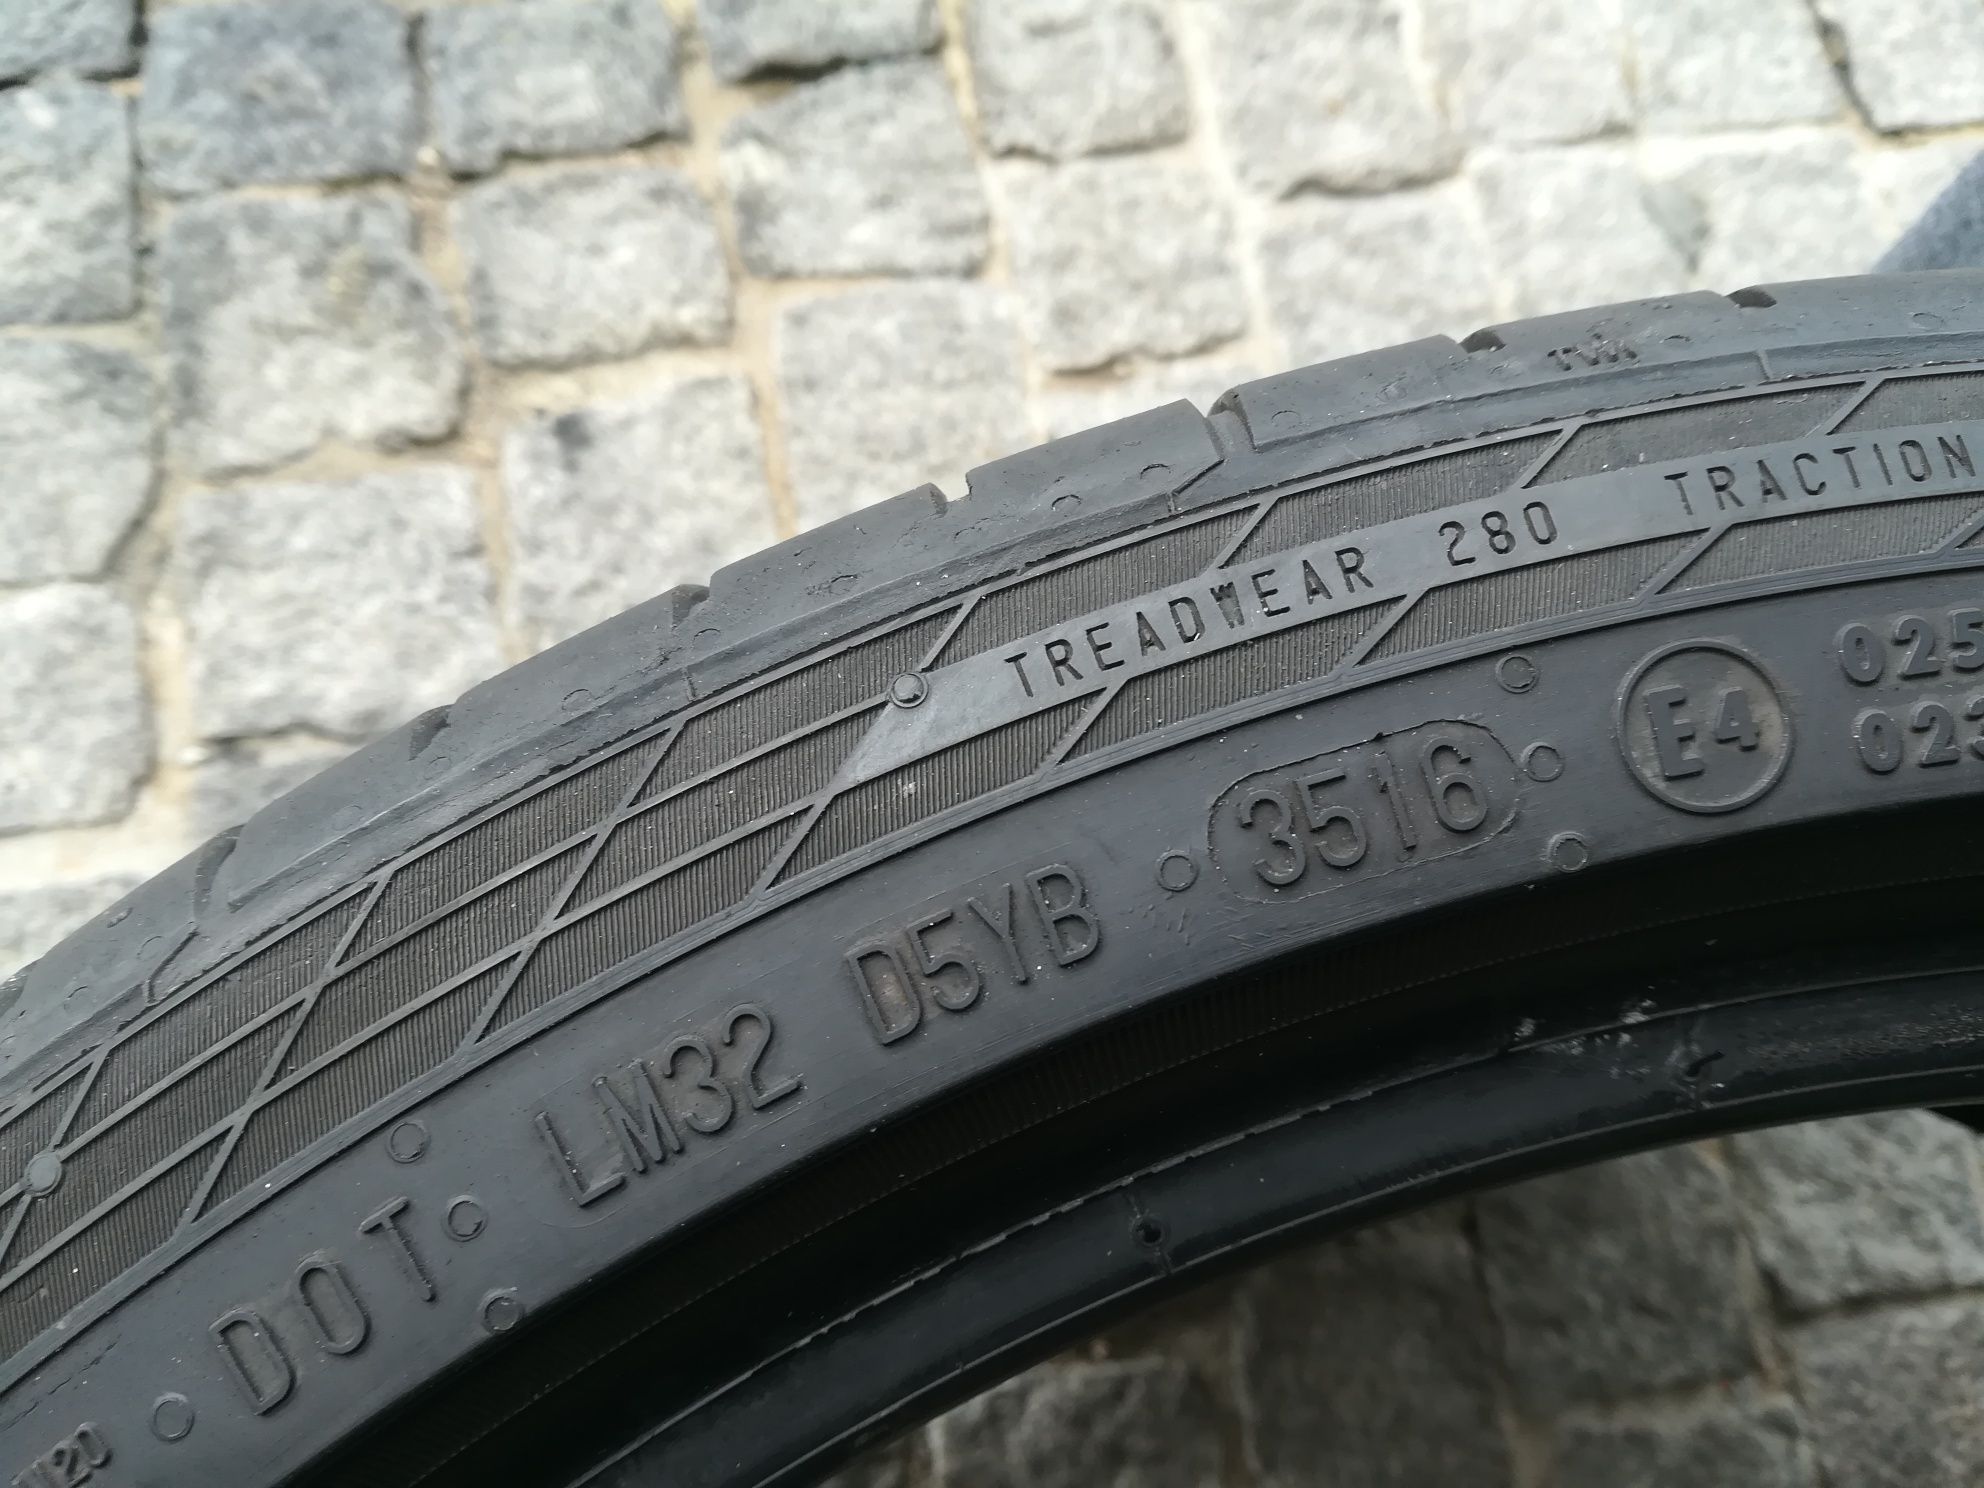 2 pneus 255 35 r19 Runflat continental